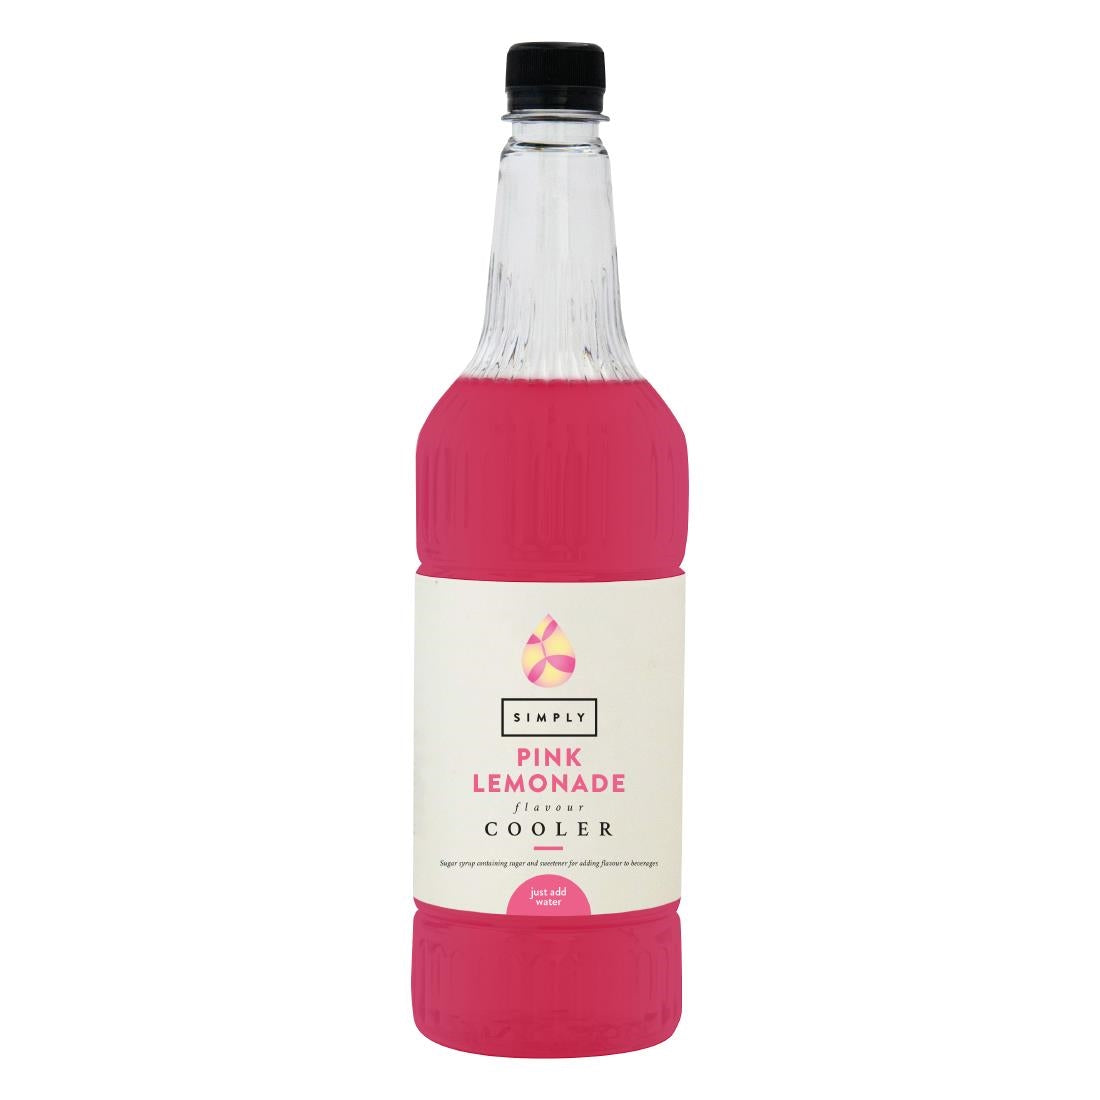 HT808 Simply Pink Lemonade Cooler Syrup 1Ltr